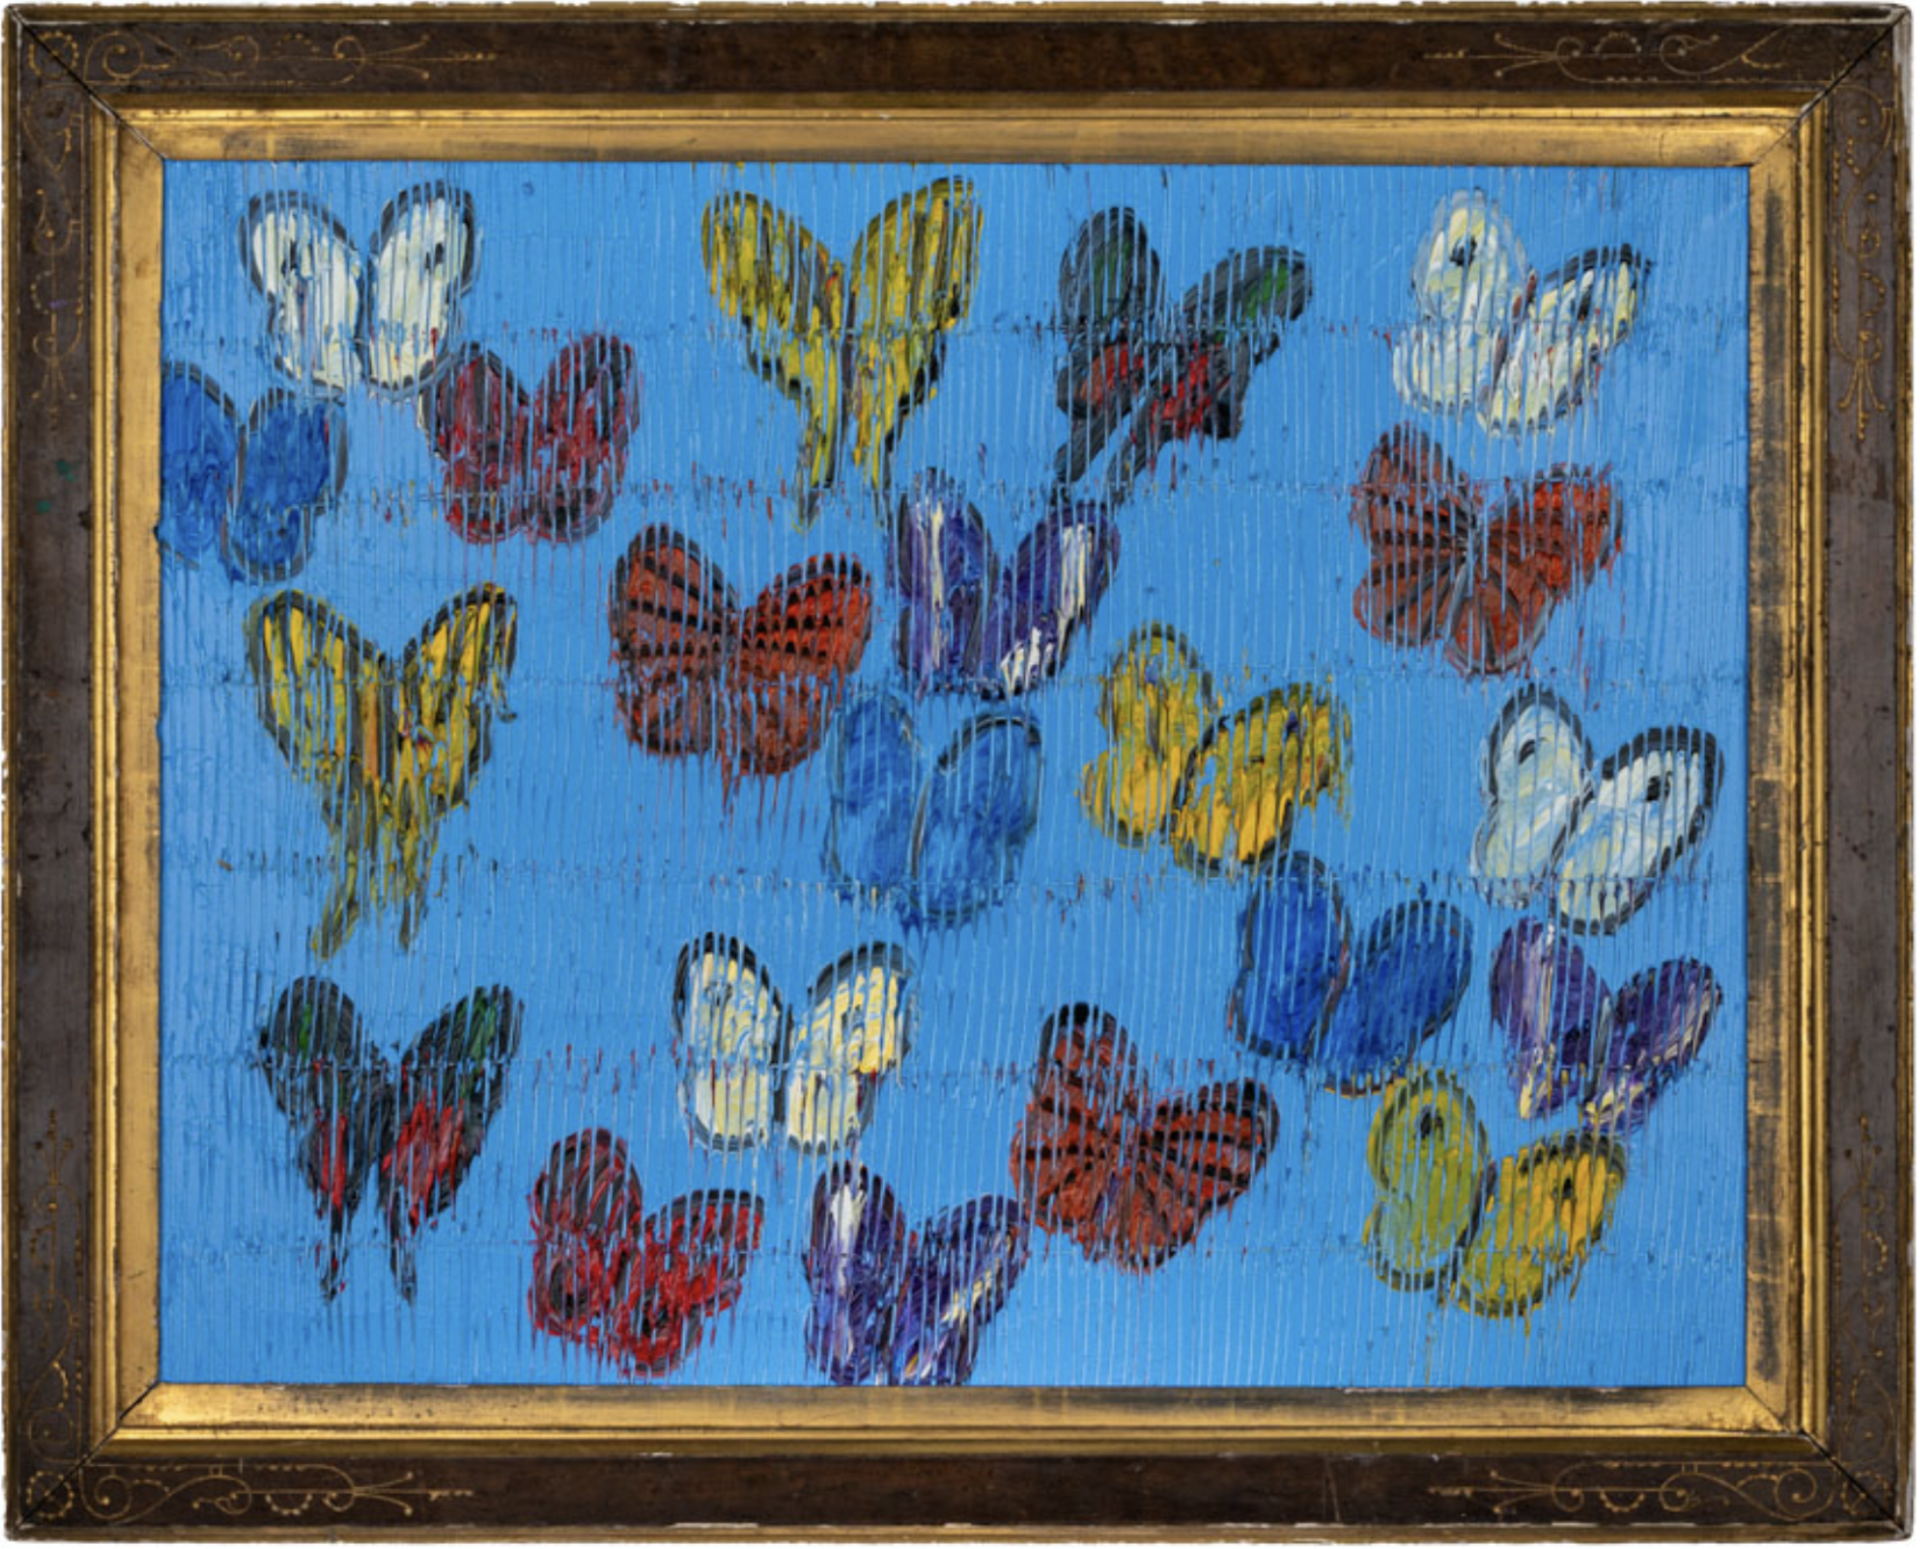 More Space Butterflies Migration by Hunt Slonem